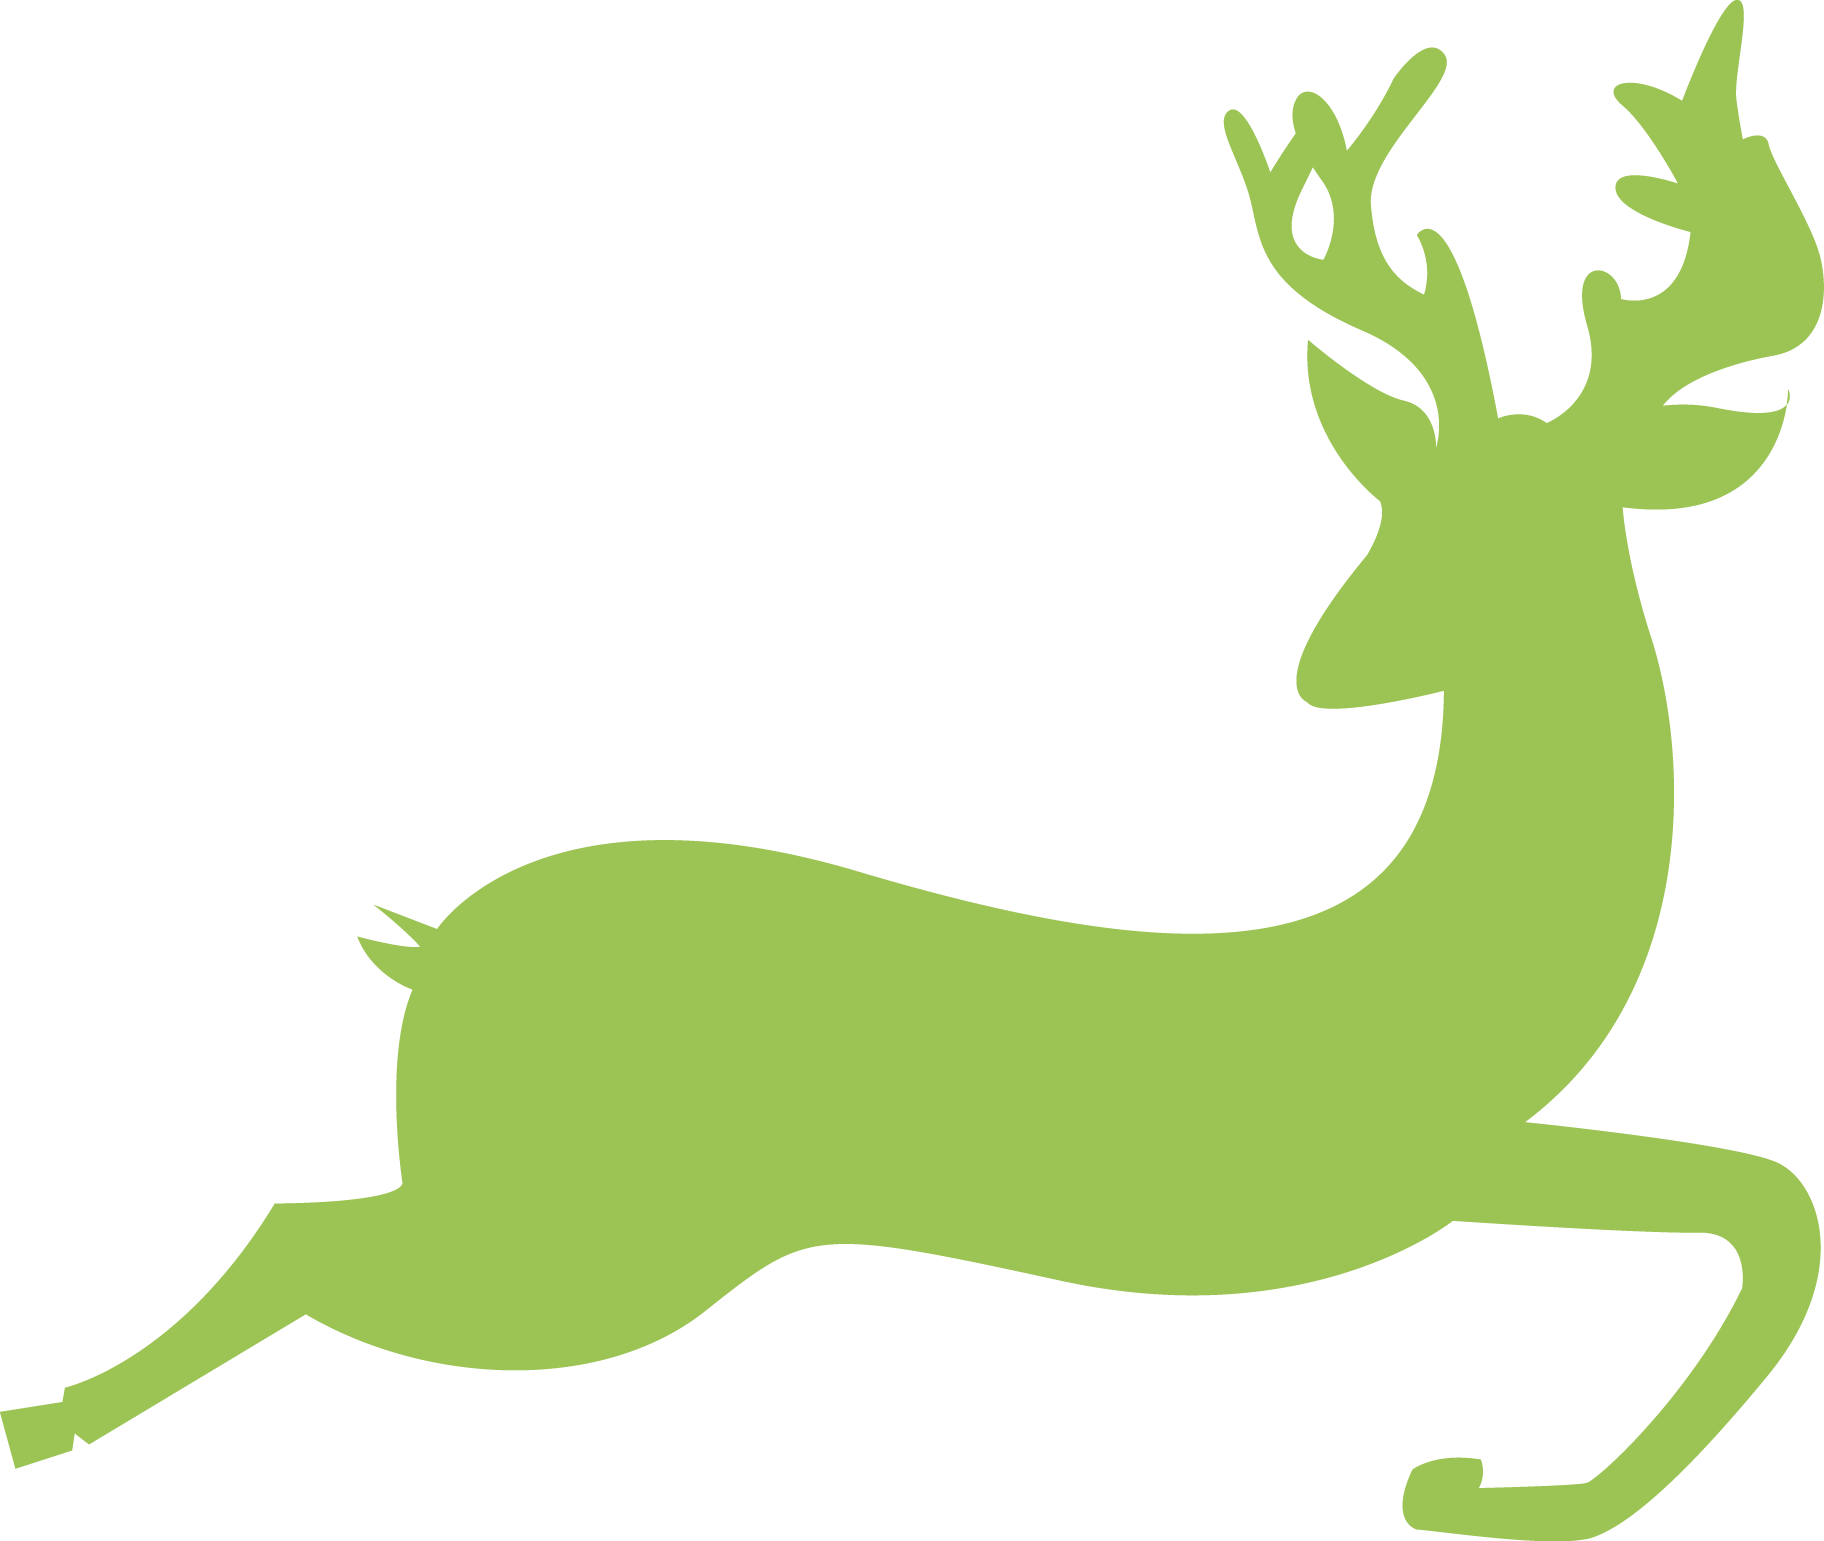 Los Renos De Antílopes, Gacelas Santa Claus Dibujo - Holiday Reindeer Address Labels (1824x1541)